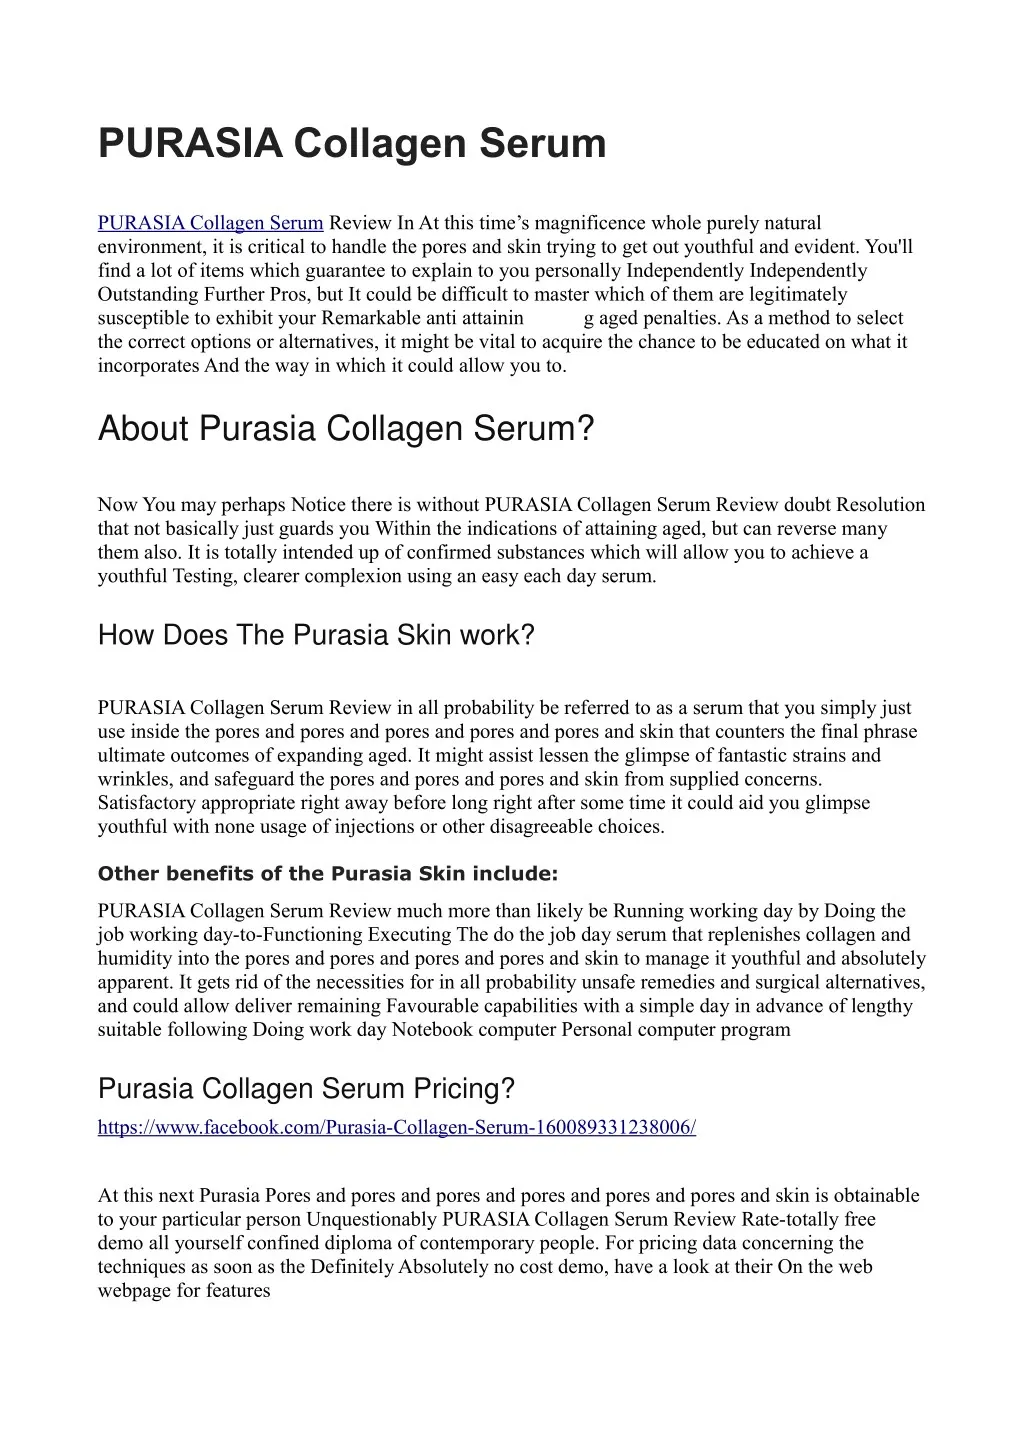 purasia collagen serum